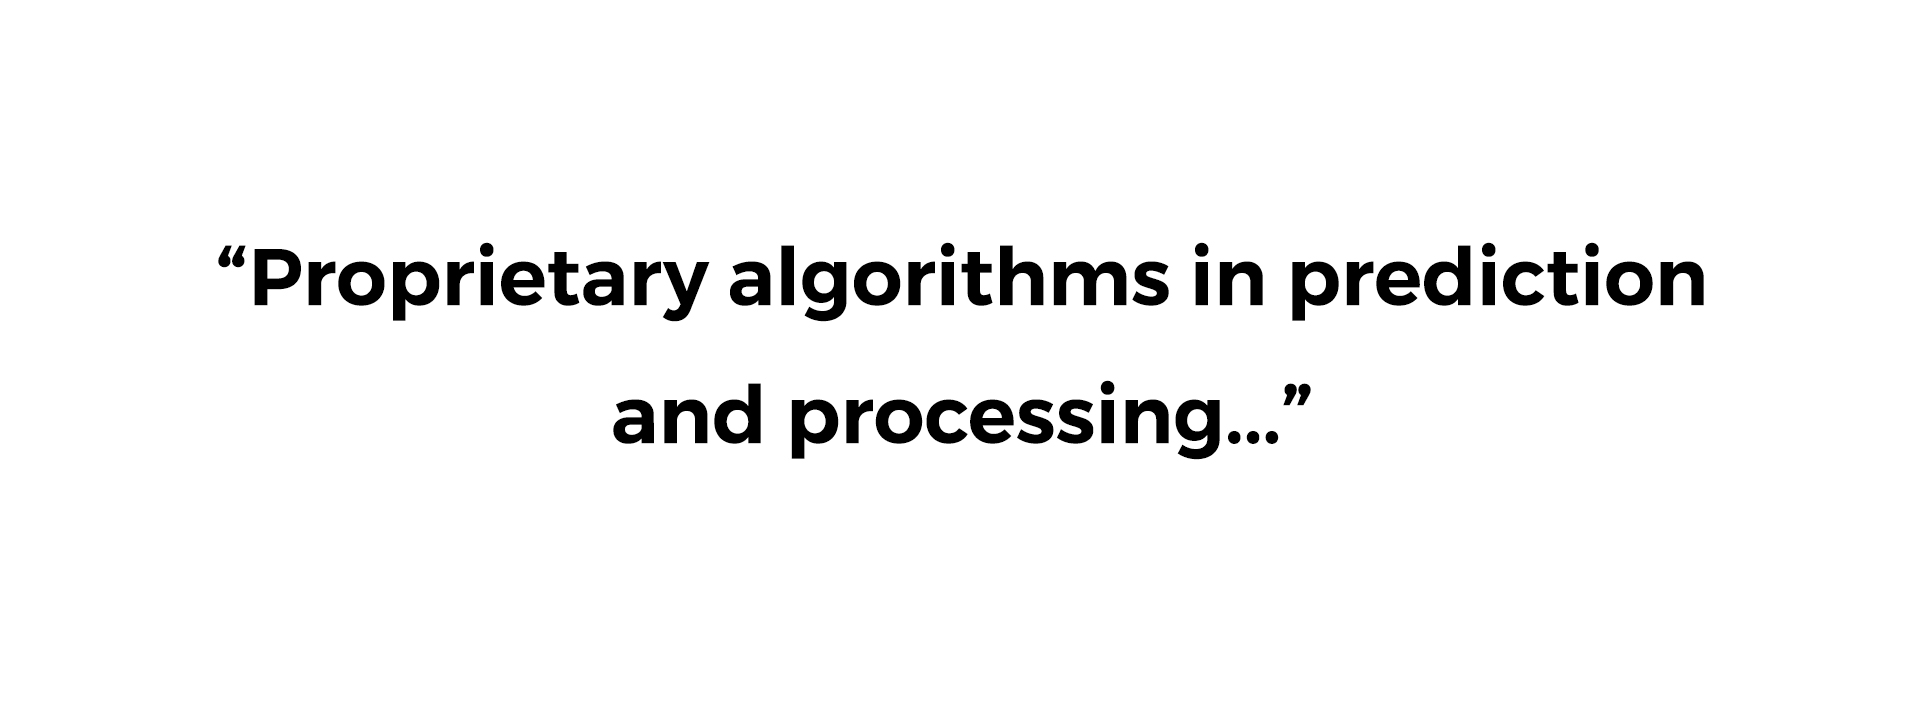 Proprietary algorithms in prediction and process-